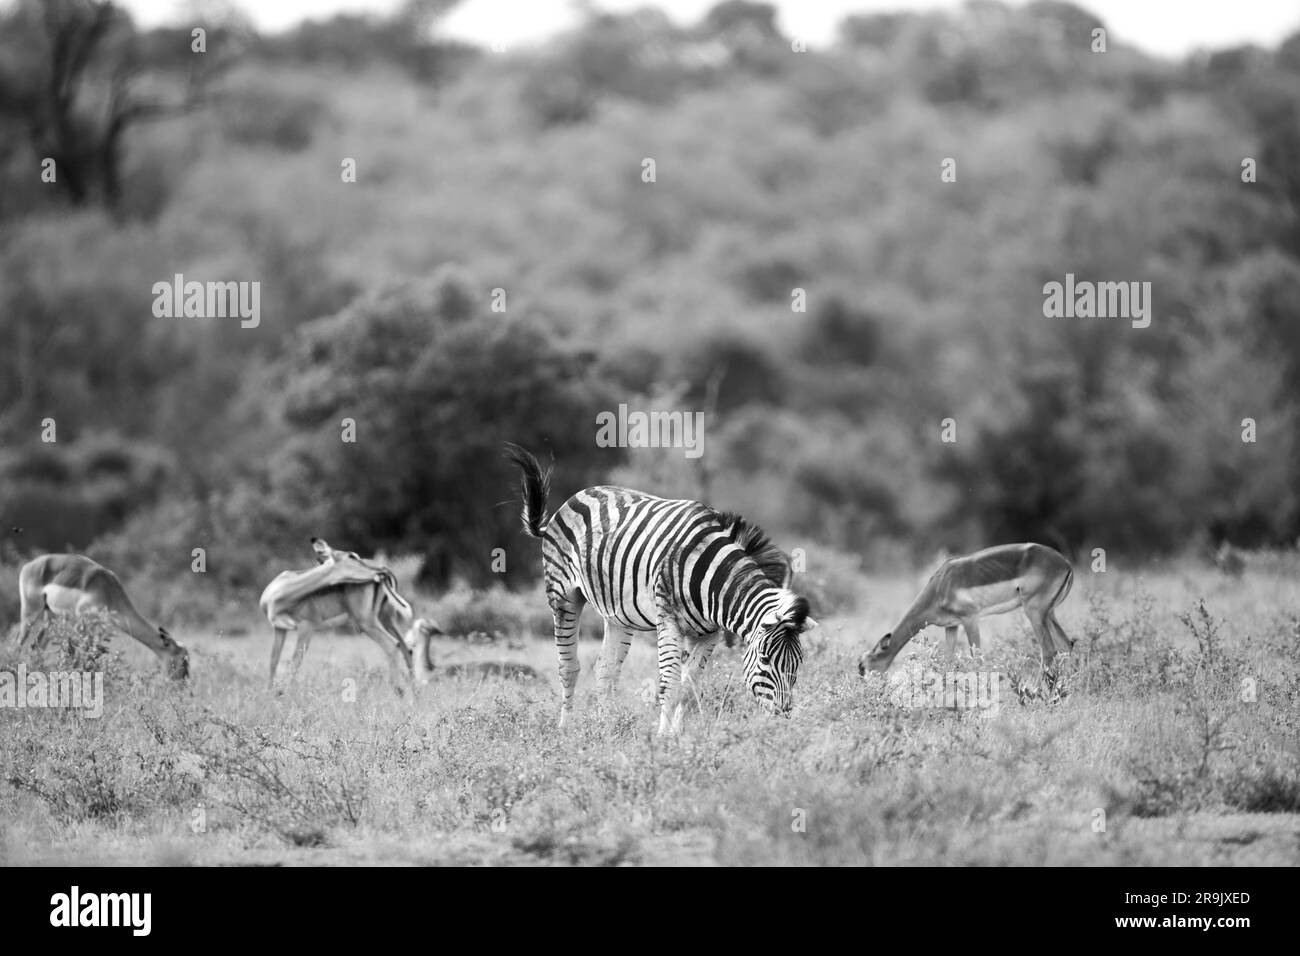 Zebra, Equus quagga and impala, Aepyceros melampus, graze on grass together, in black and white. Stock Photo